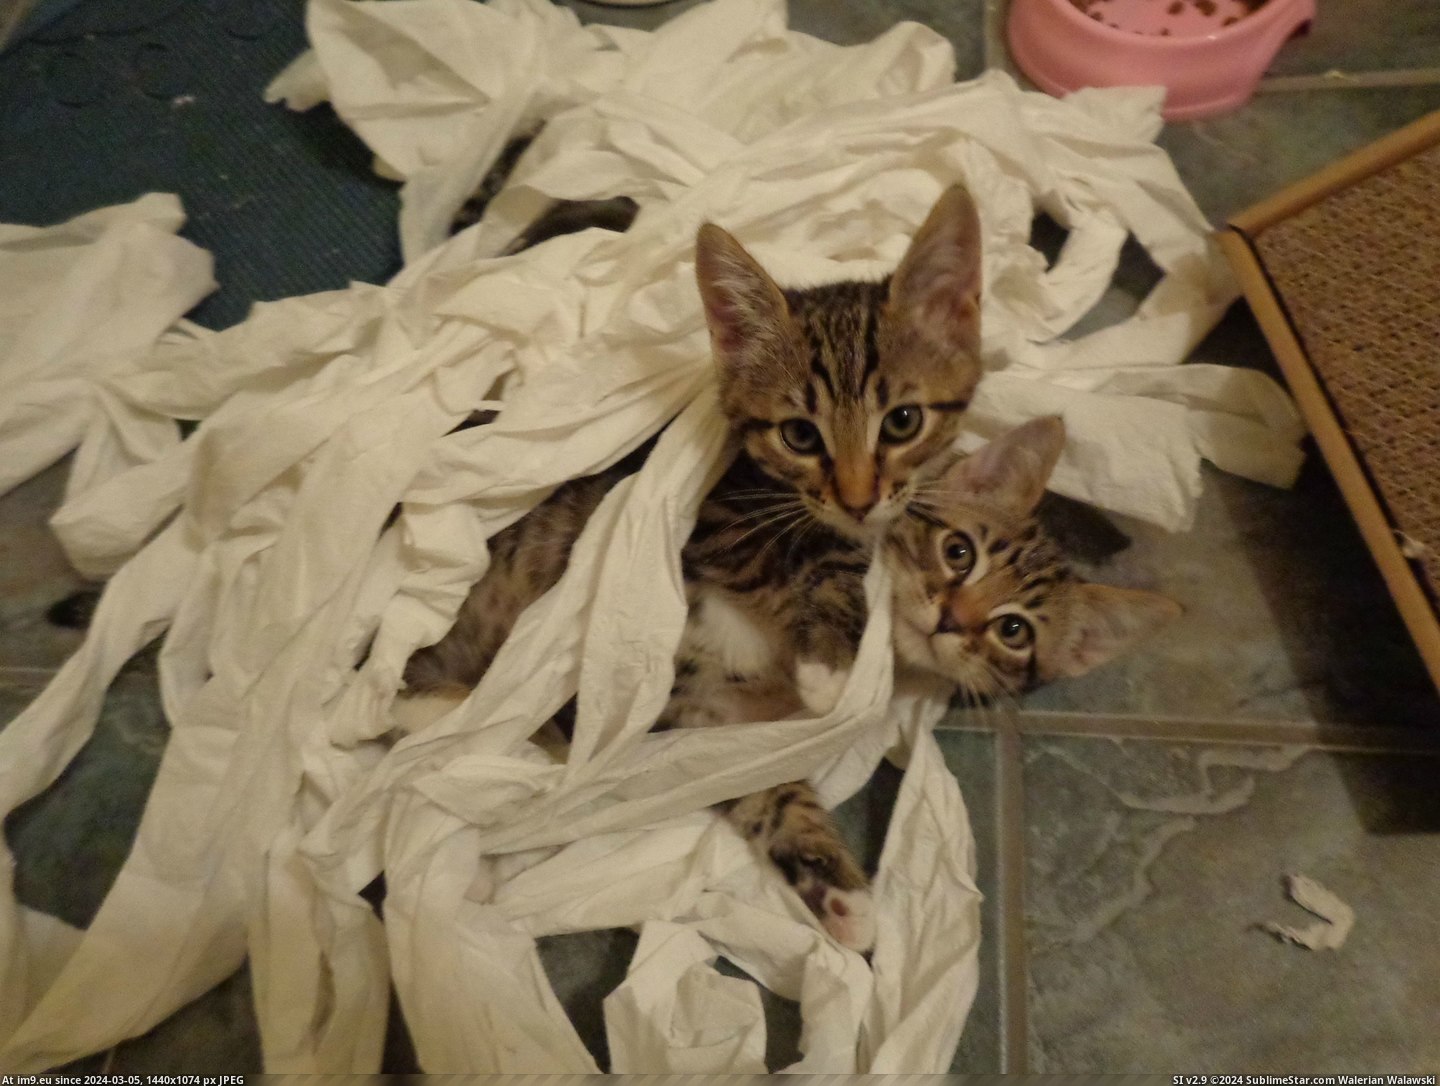 #New #Toilet #Roll #Discovered #Kittens #Paper [Aww] So my new kittens discovered the toilet paper roll... Pic. (Bild von album My r/AWW favs))